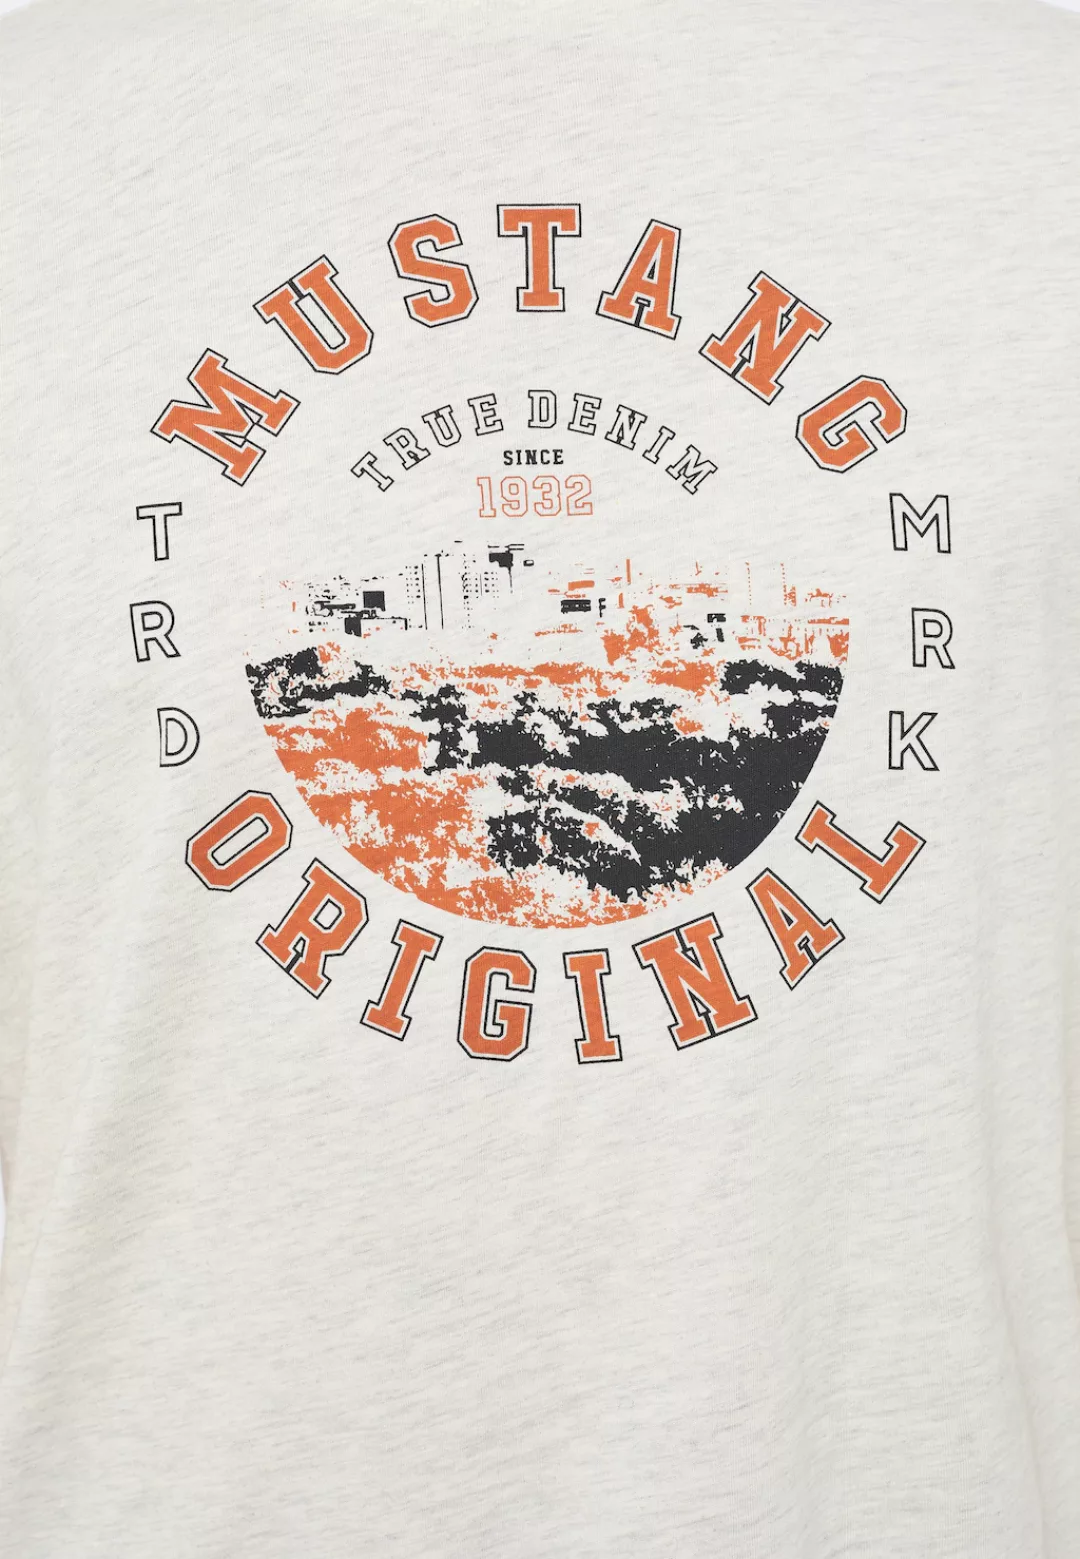 MUSTANG T-Shirt "Style Aidan C Print" günstig online kaufen